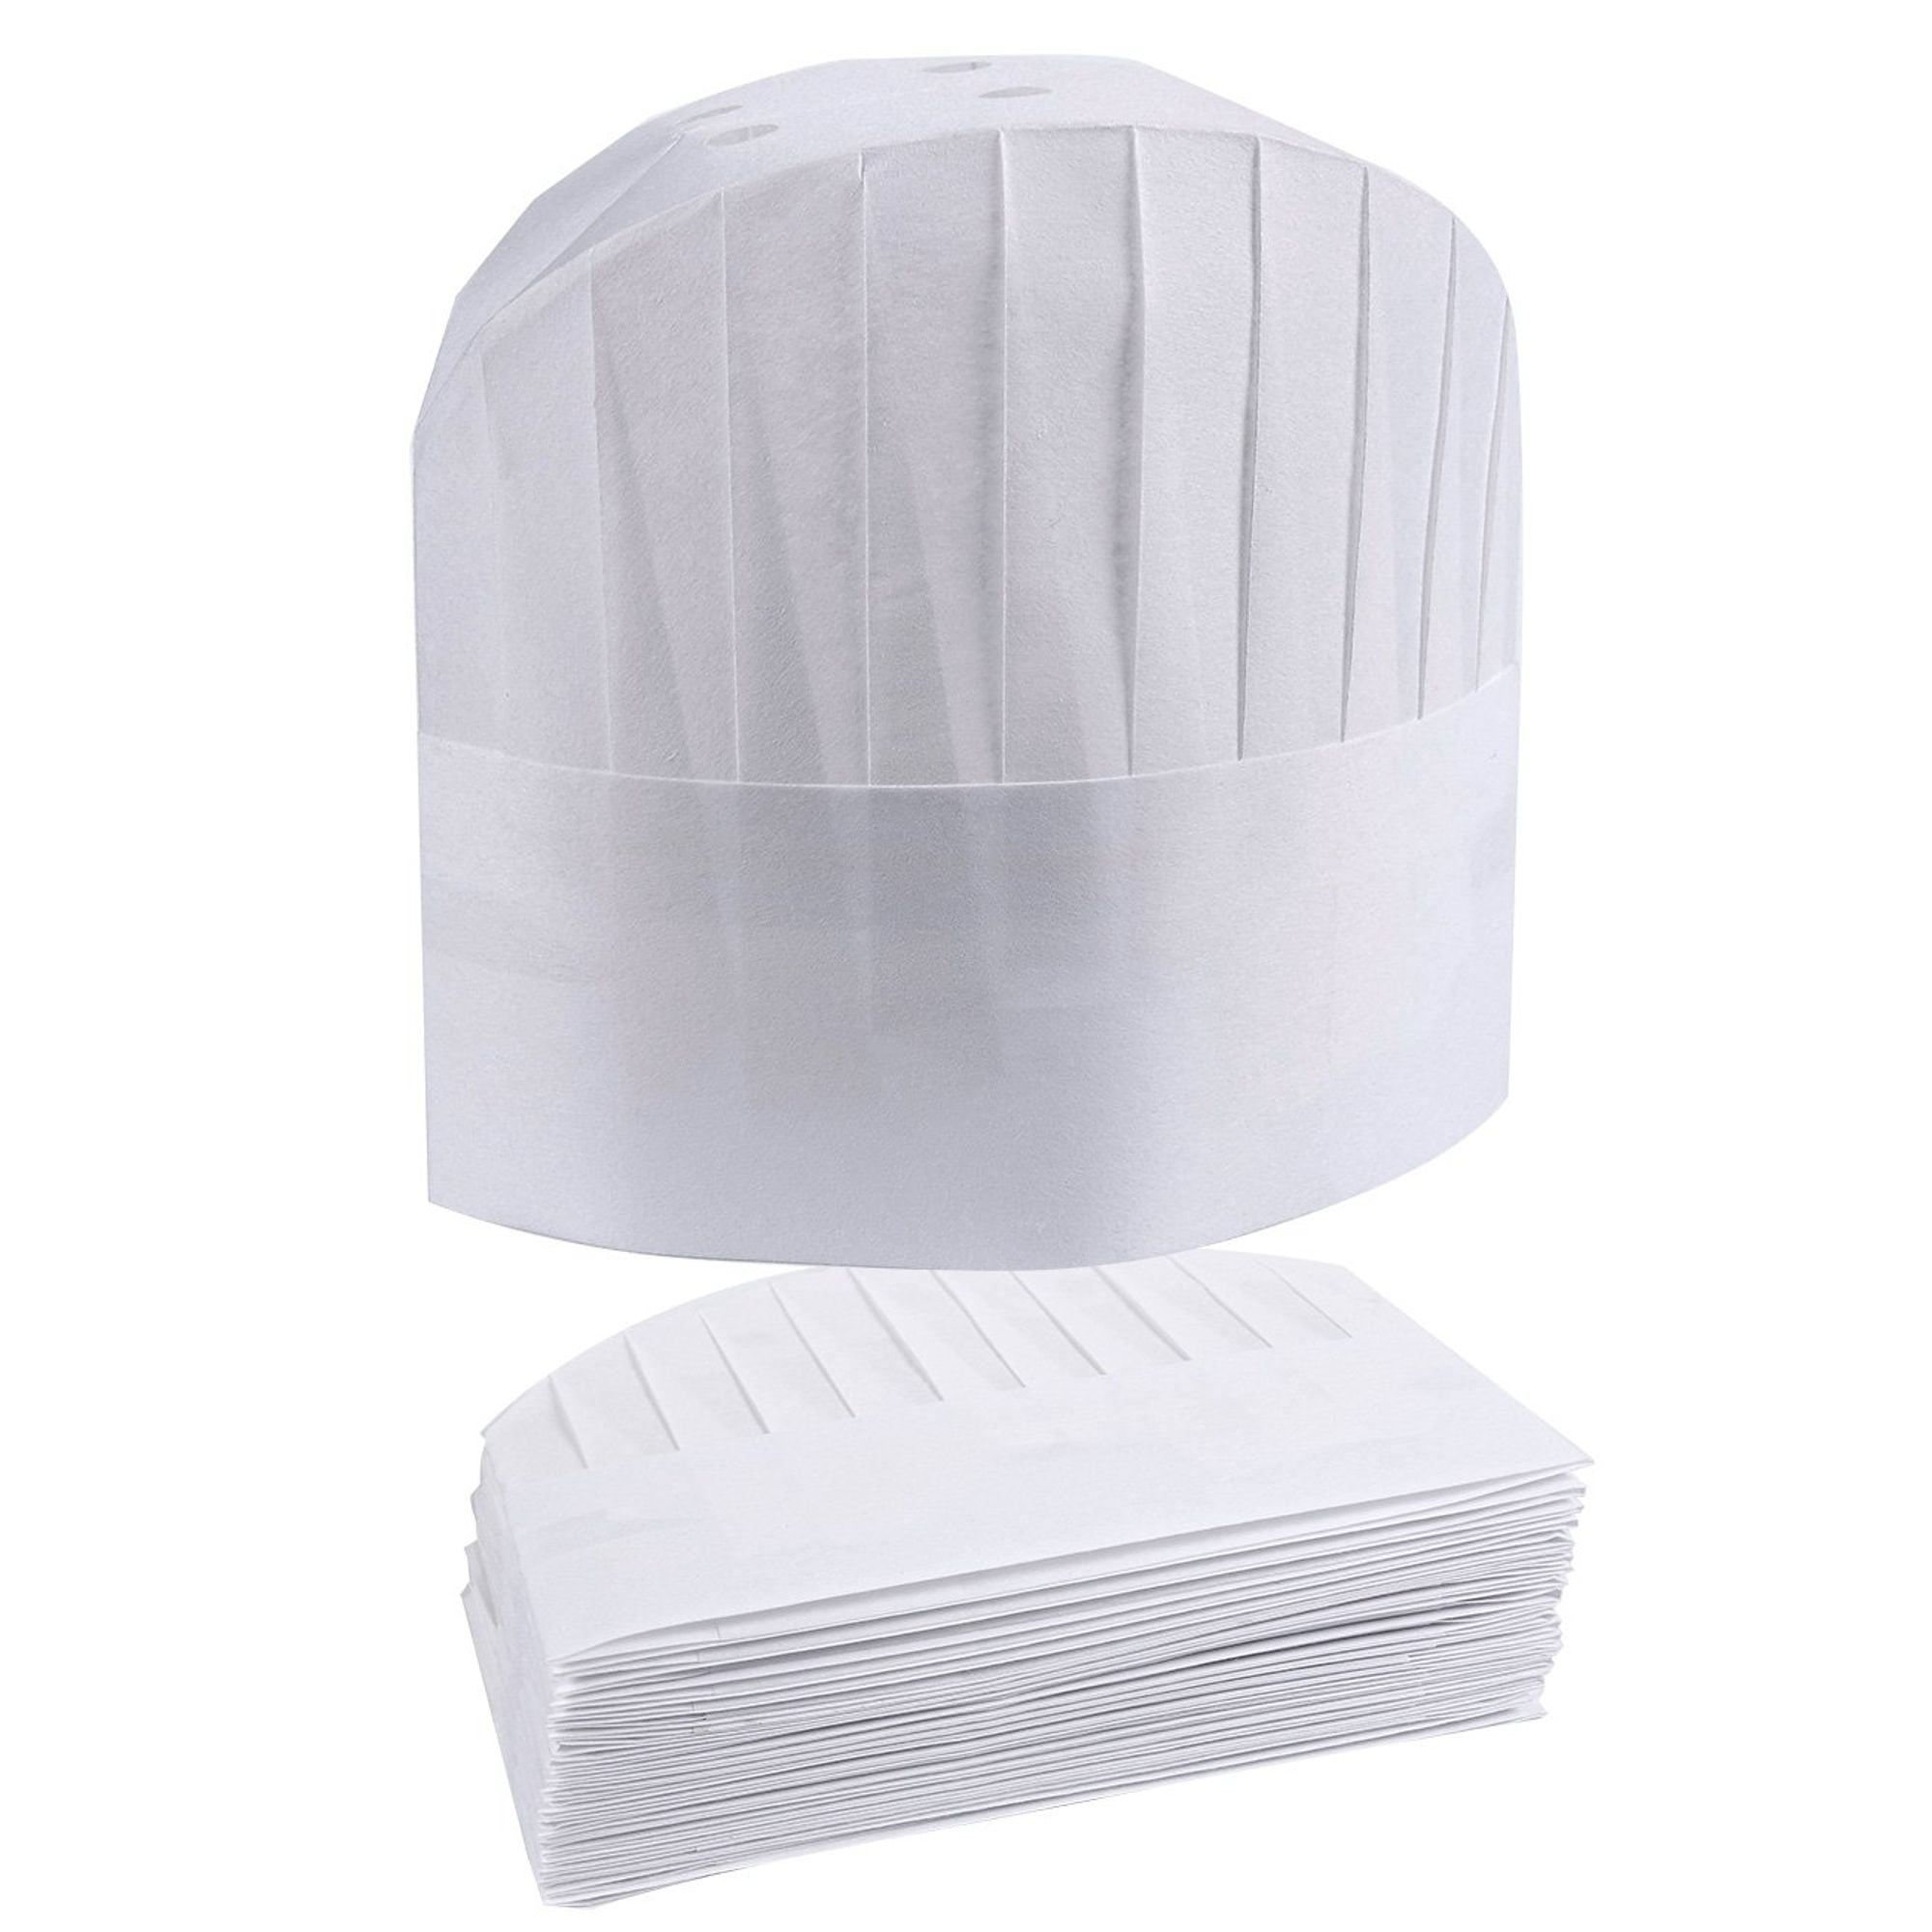 Box Hat - Regular Size Choice 13\ Amazon.com: Kids White Chef Hat: Clothing...